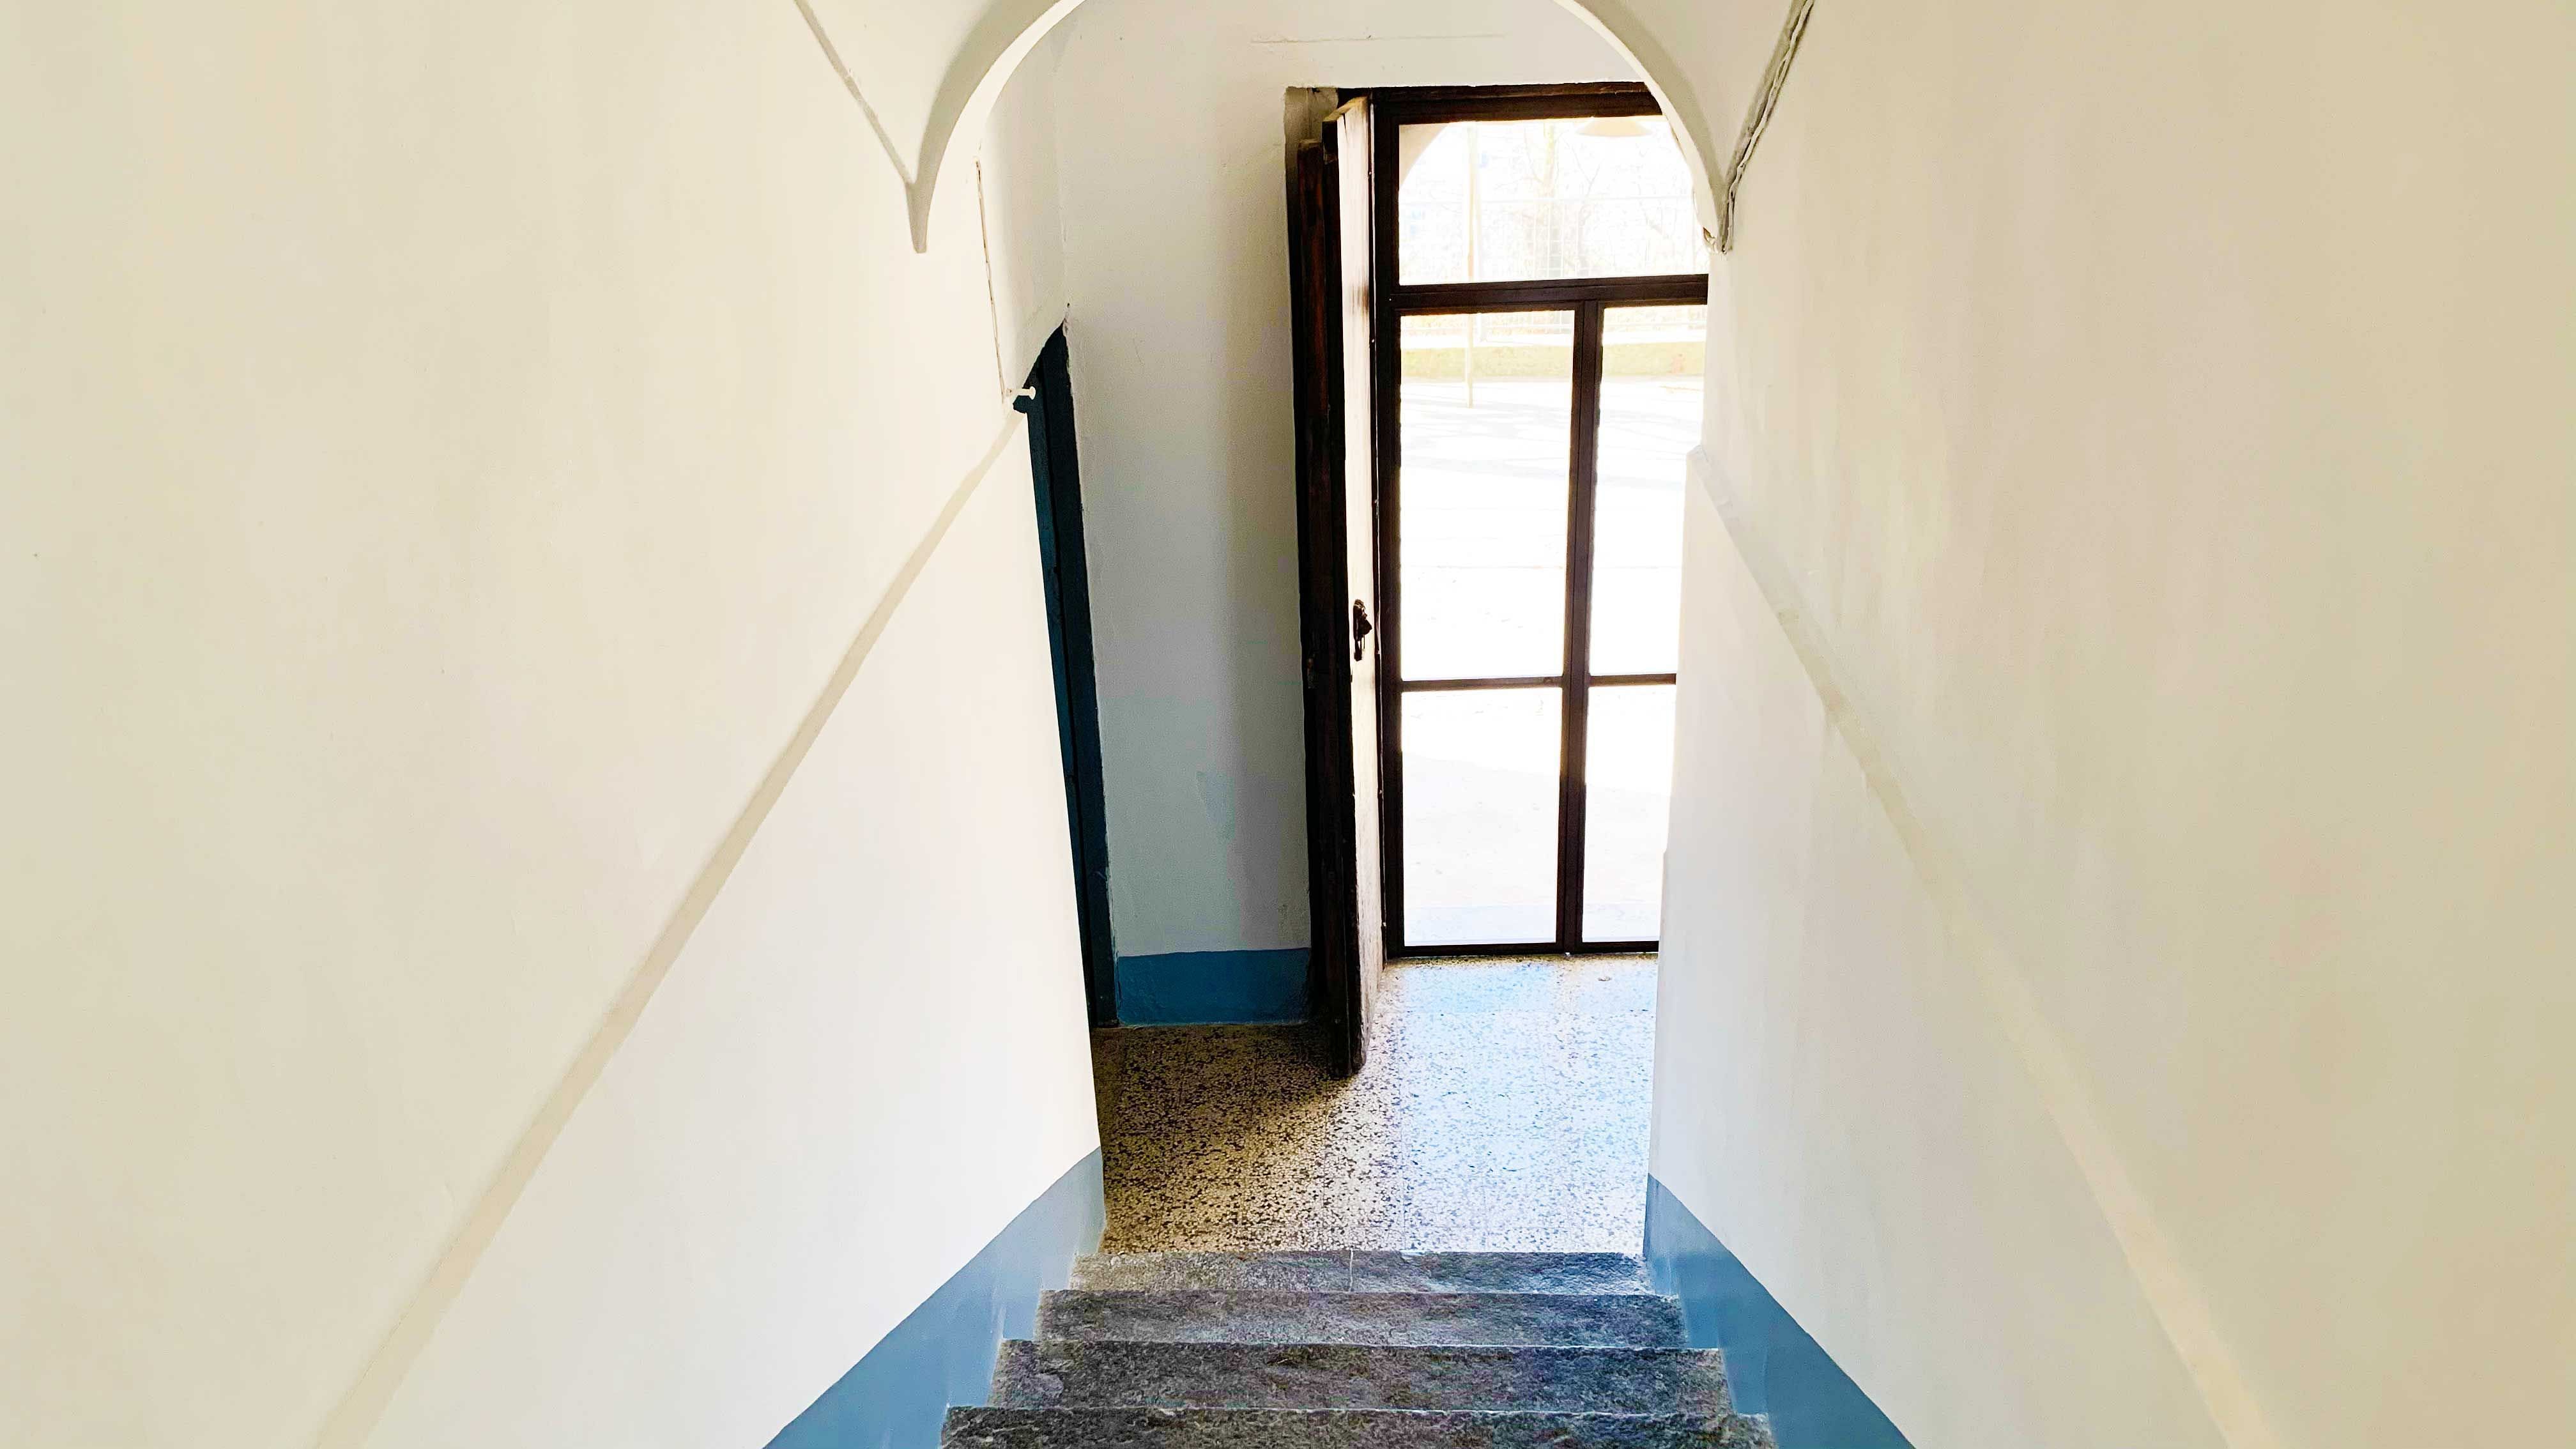 JWguest Apartment at Pianillo, Campania | Residence "Alma" on the Amalfi Coast | Jwbnb no brobnb 26